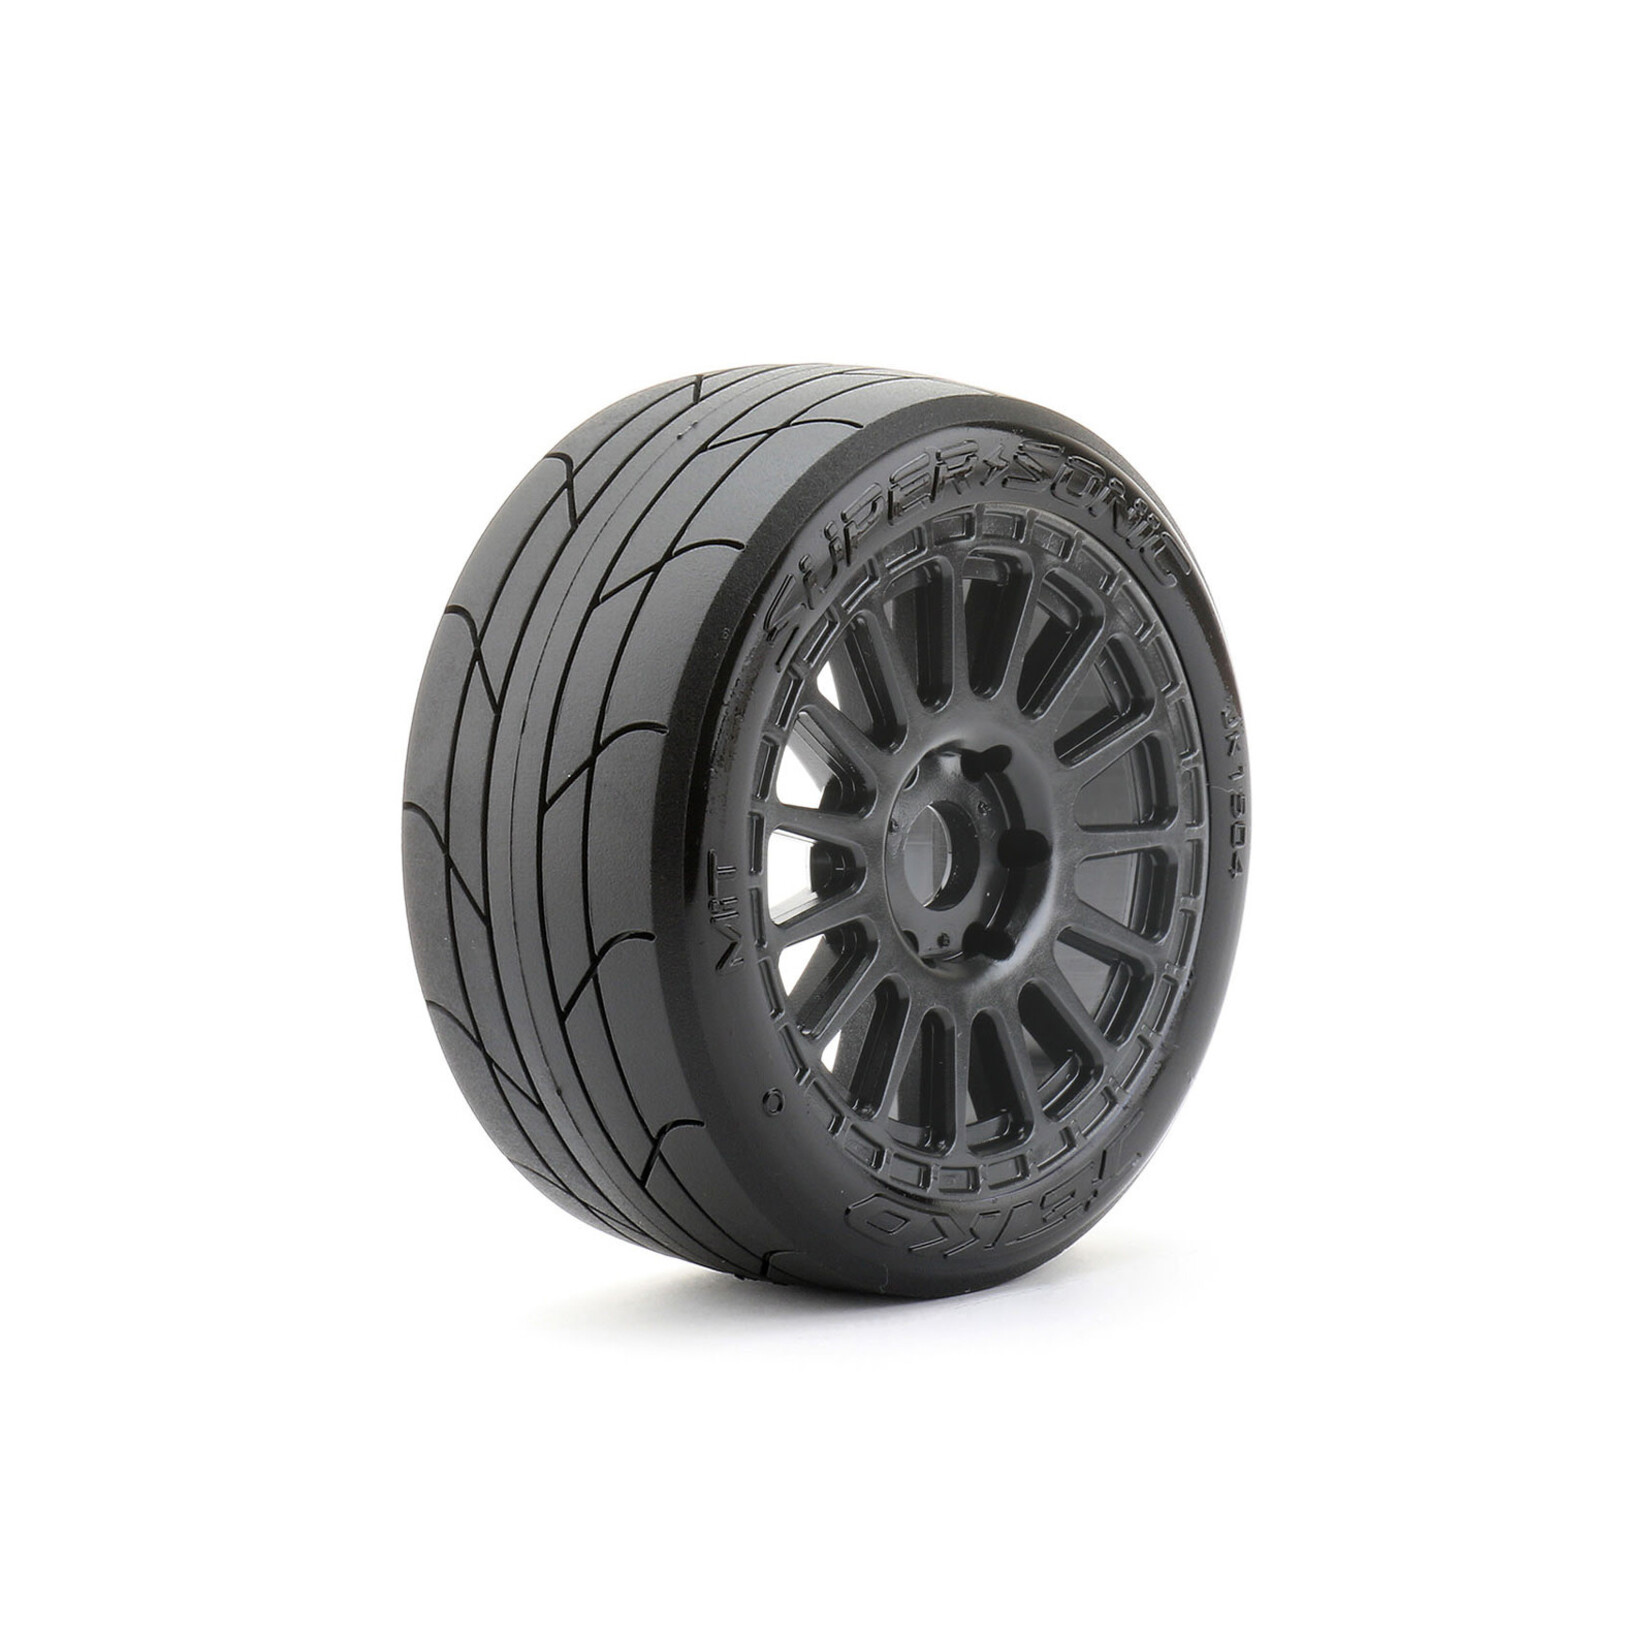 Jetko Tires Jetko 1/8 Buggy Super Sonic Pre-Mounted Belted Tires (Medium Soft) (Black) #JKO1504RBMSGB